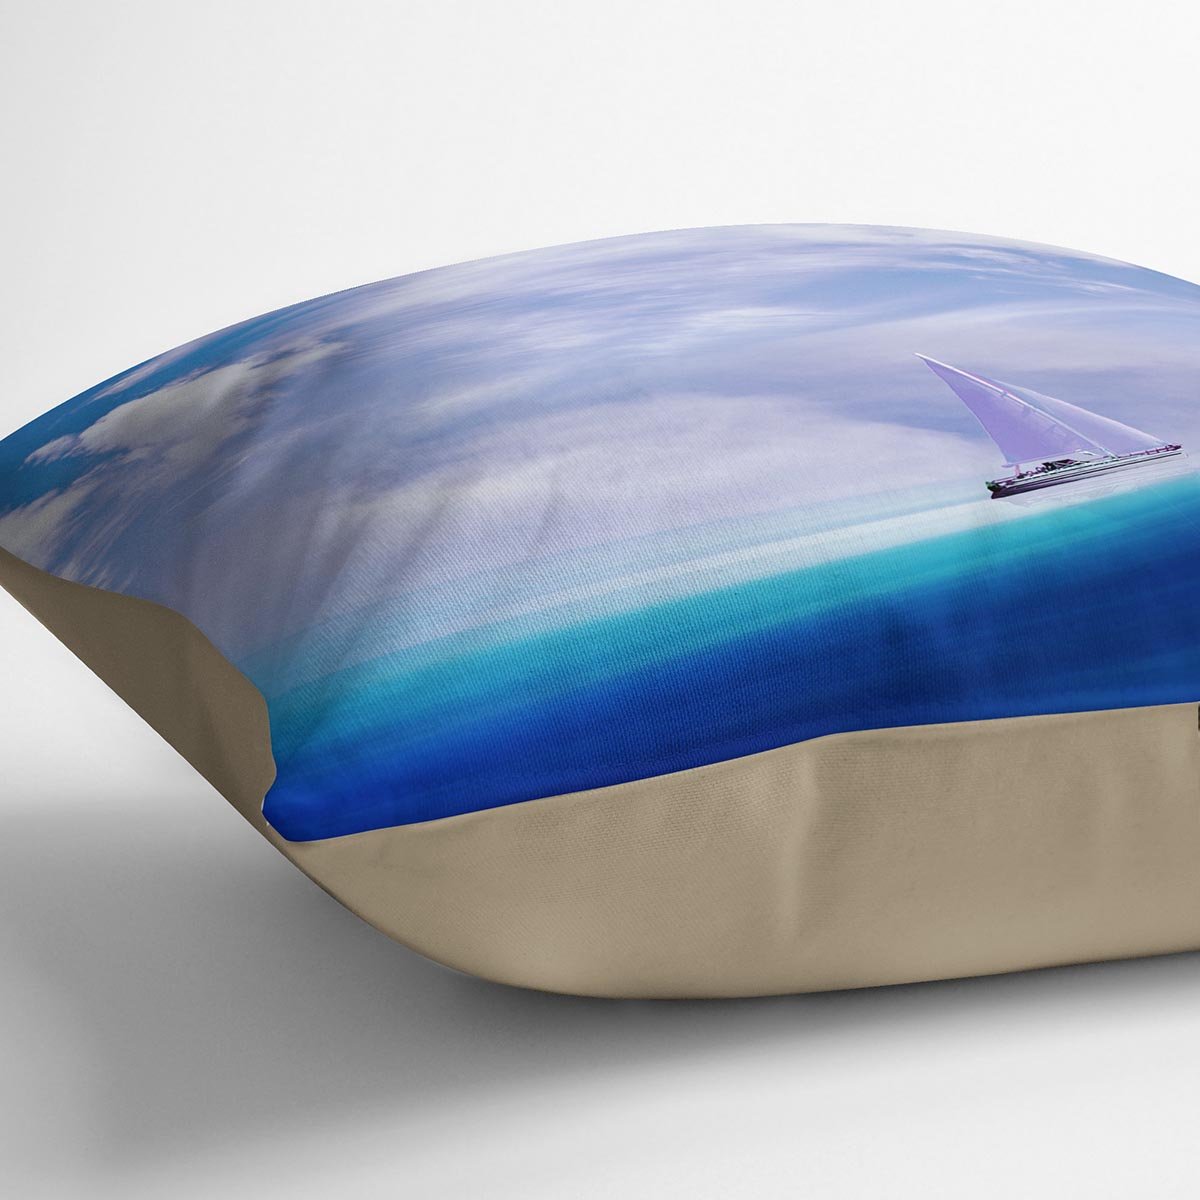 The Blue Sea Cushion